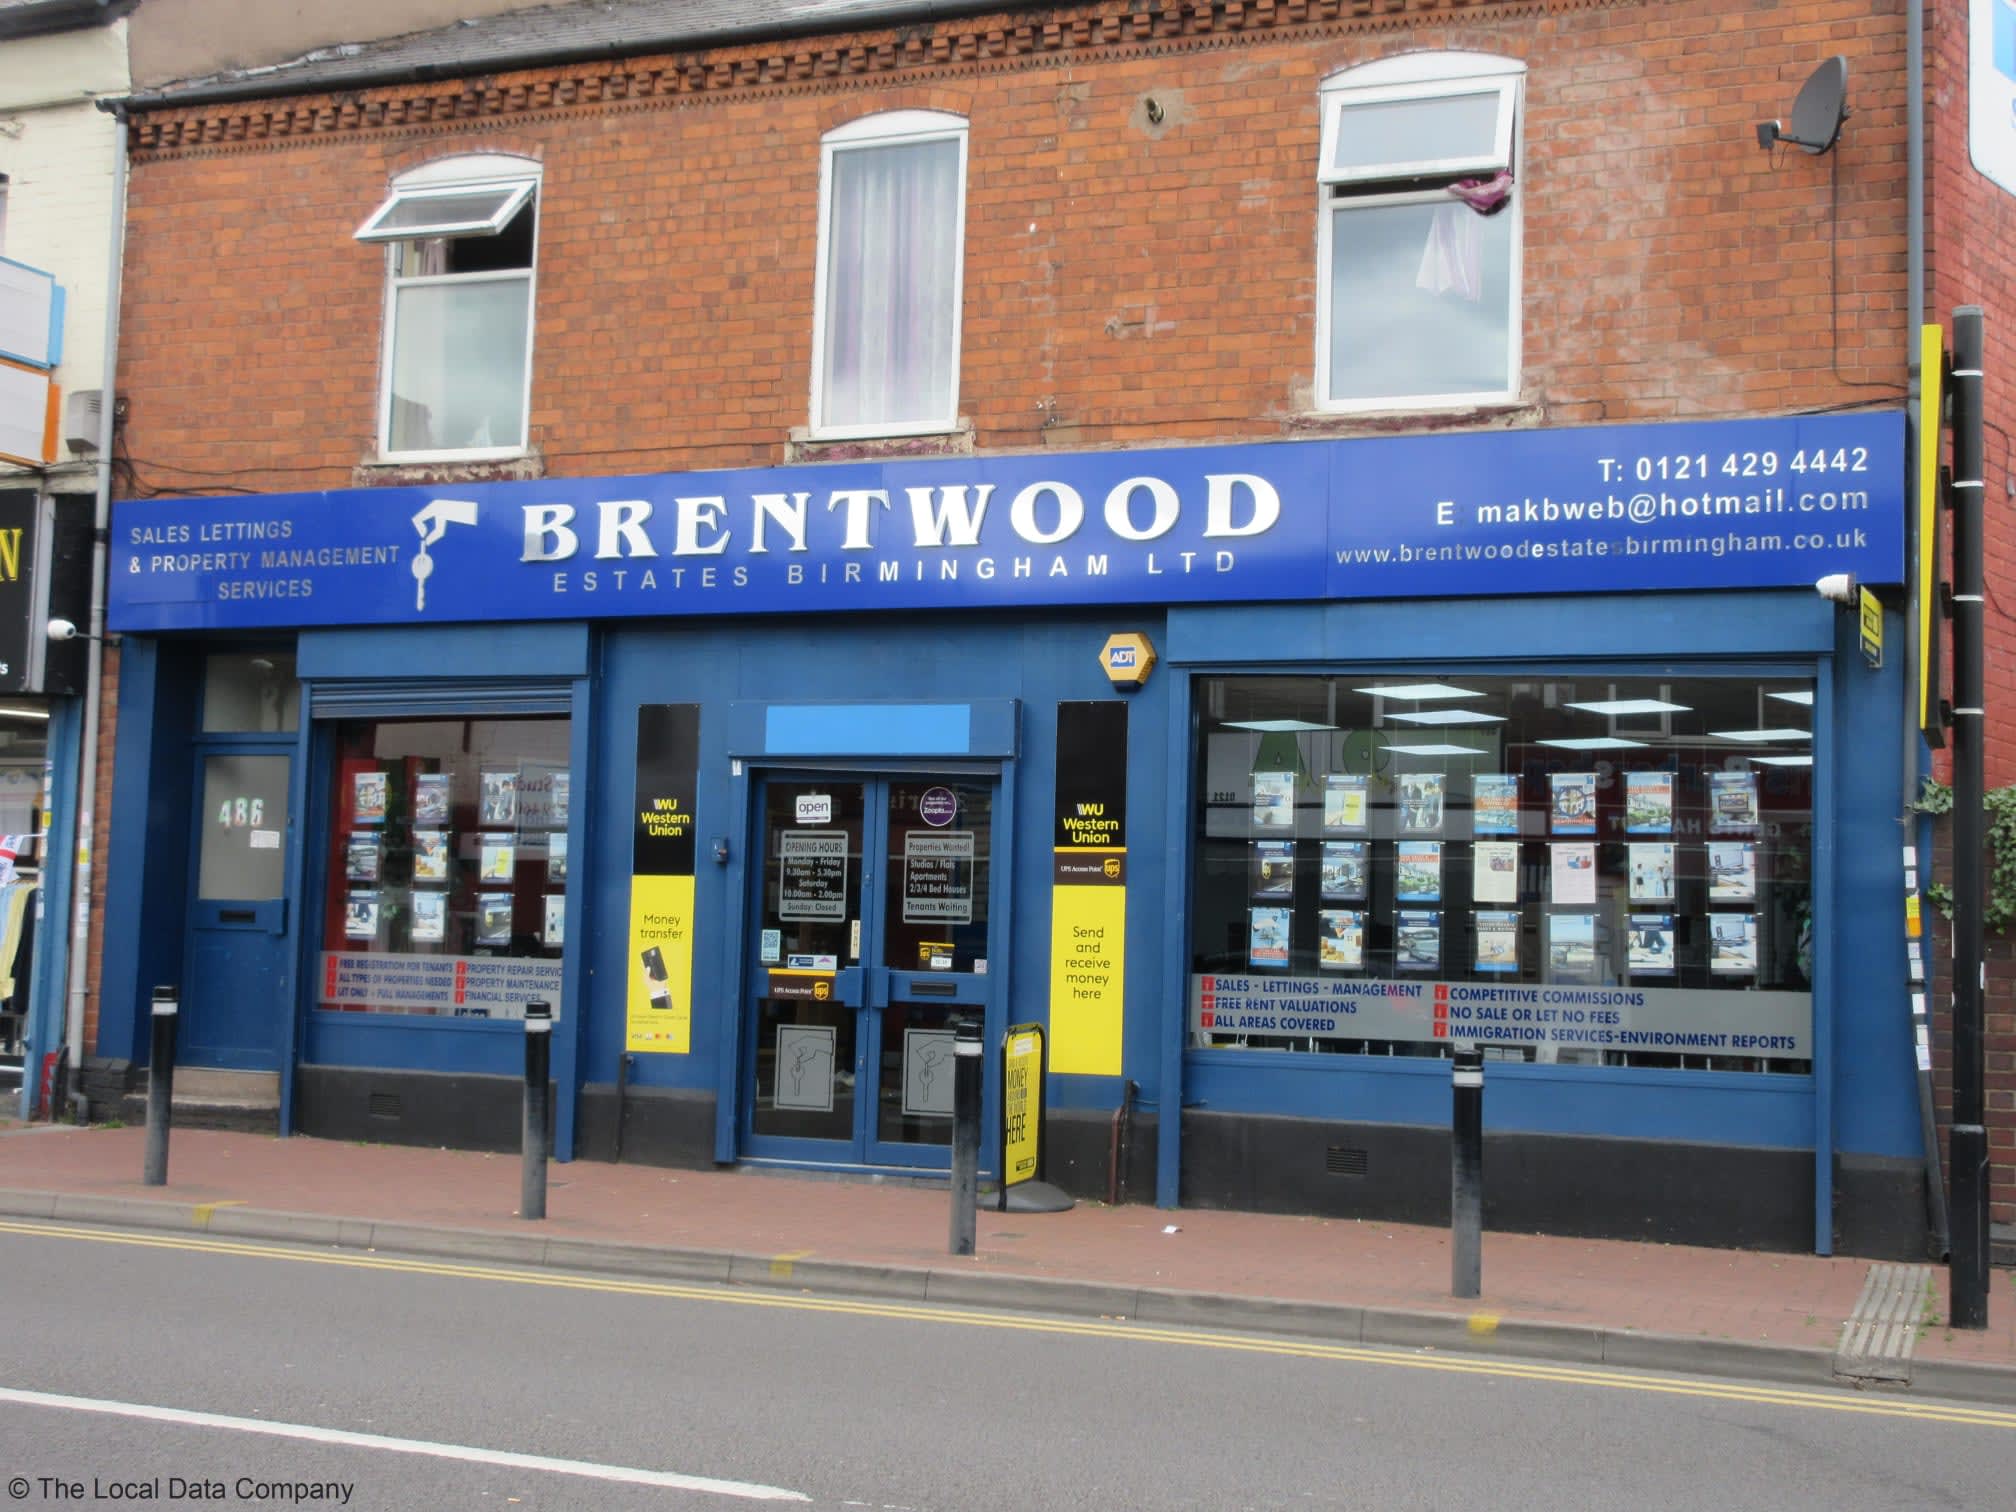 Images Brentwood Estates Birmingham Ltd